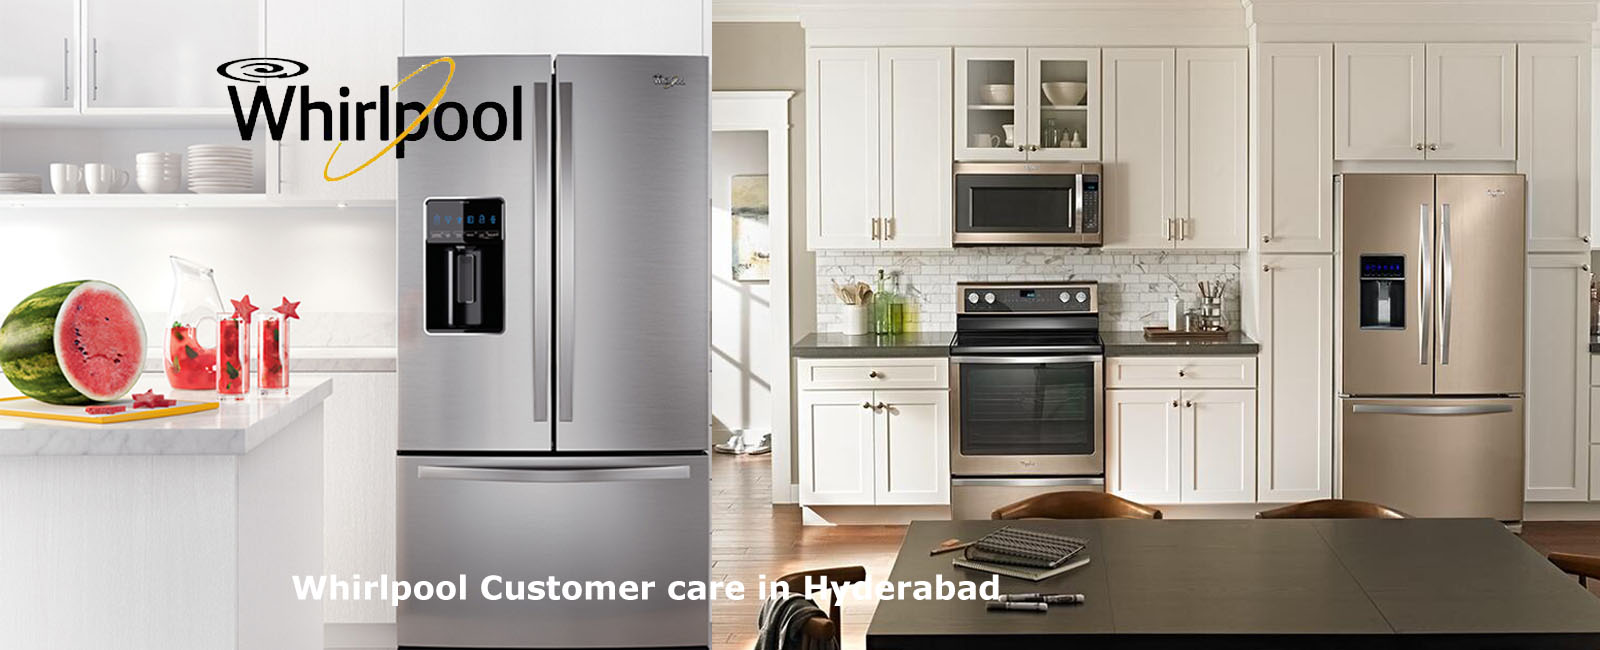 Whirlpool Refrigerator Customer care in Hyderabad